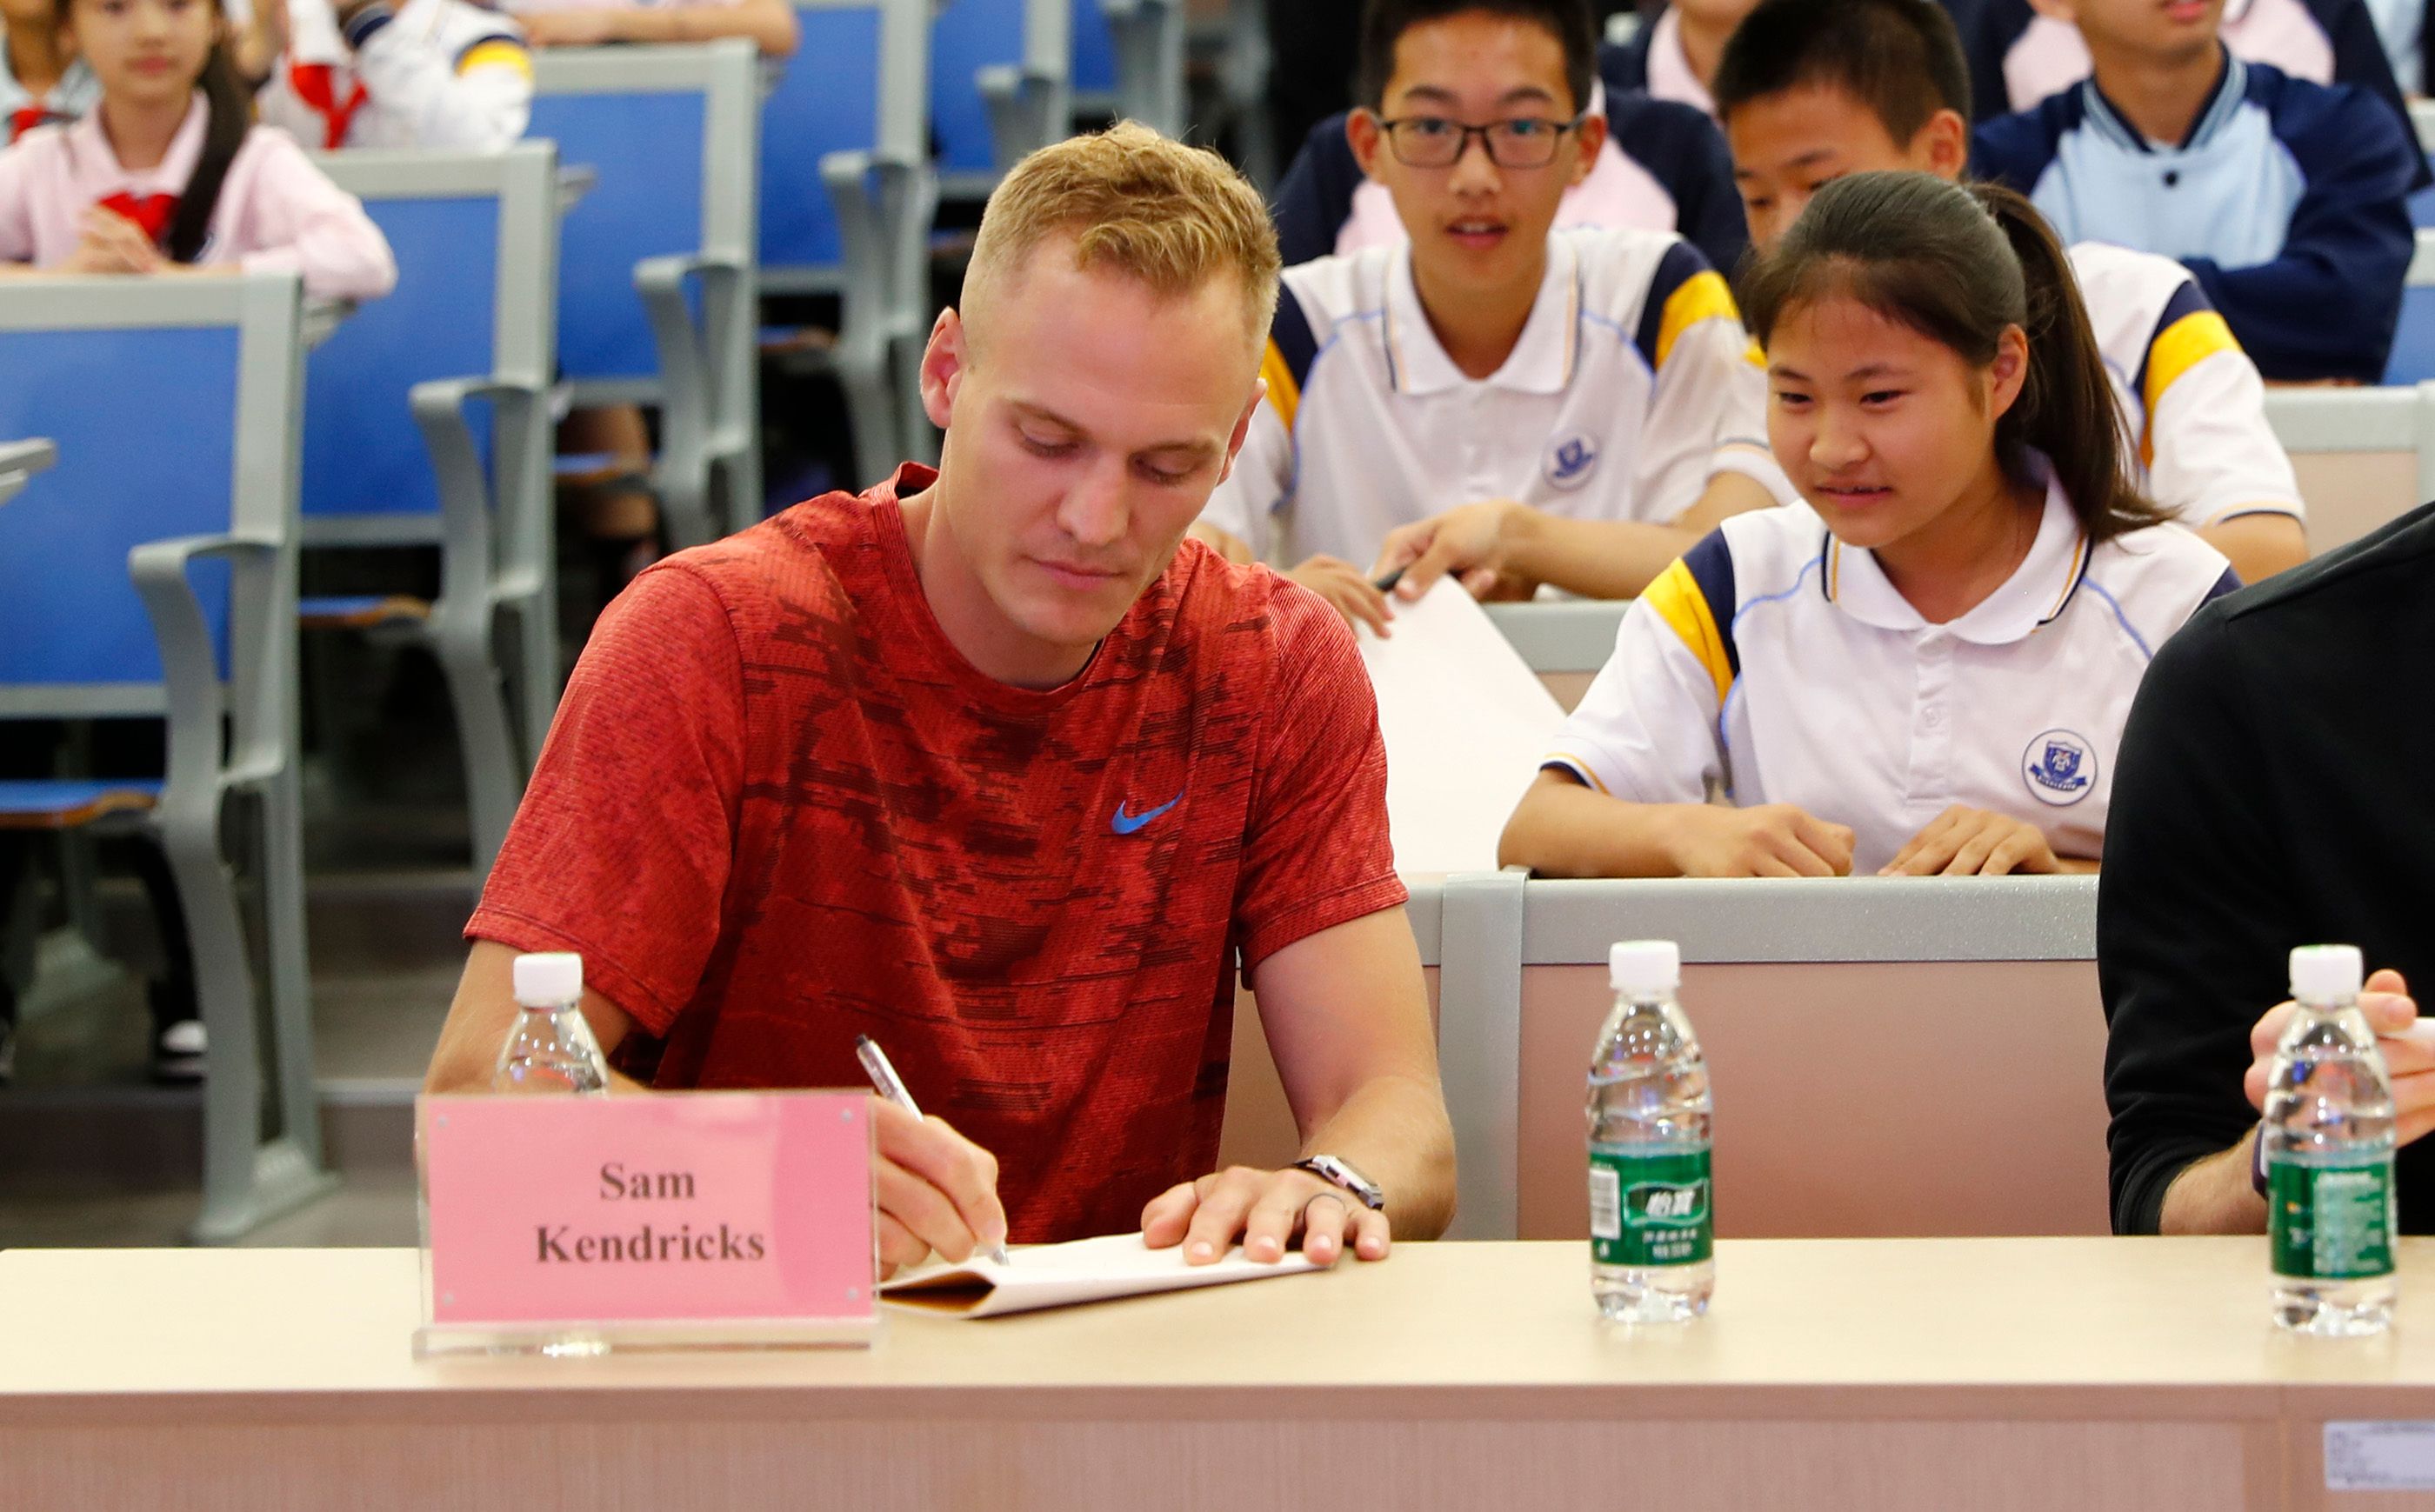 Sam Kendricks writes a note during a school visit in Xiamen